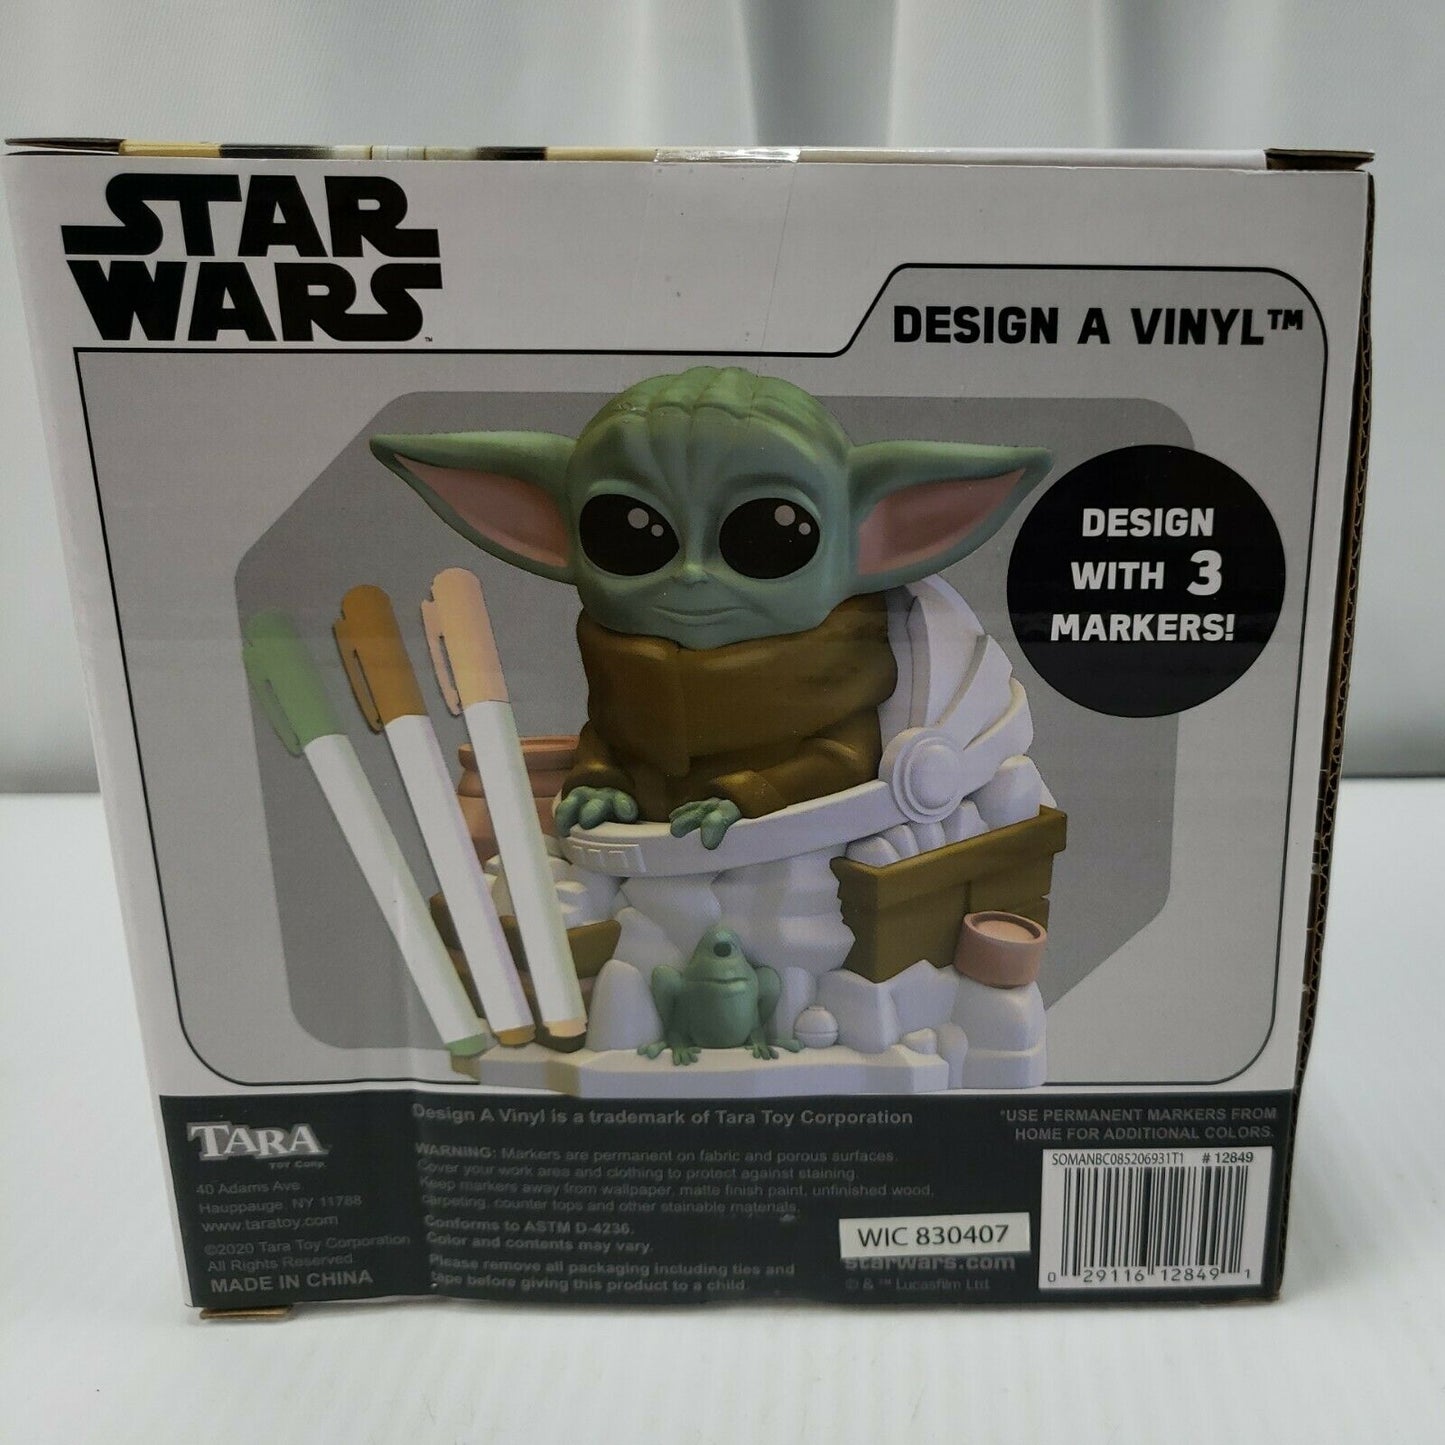 Star Wars The Mandolorian The Child Disney Design a Vinyl Color Baby Yoda 2020